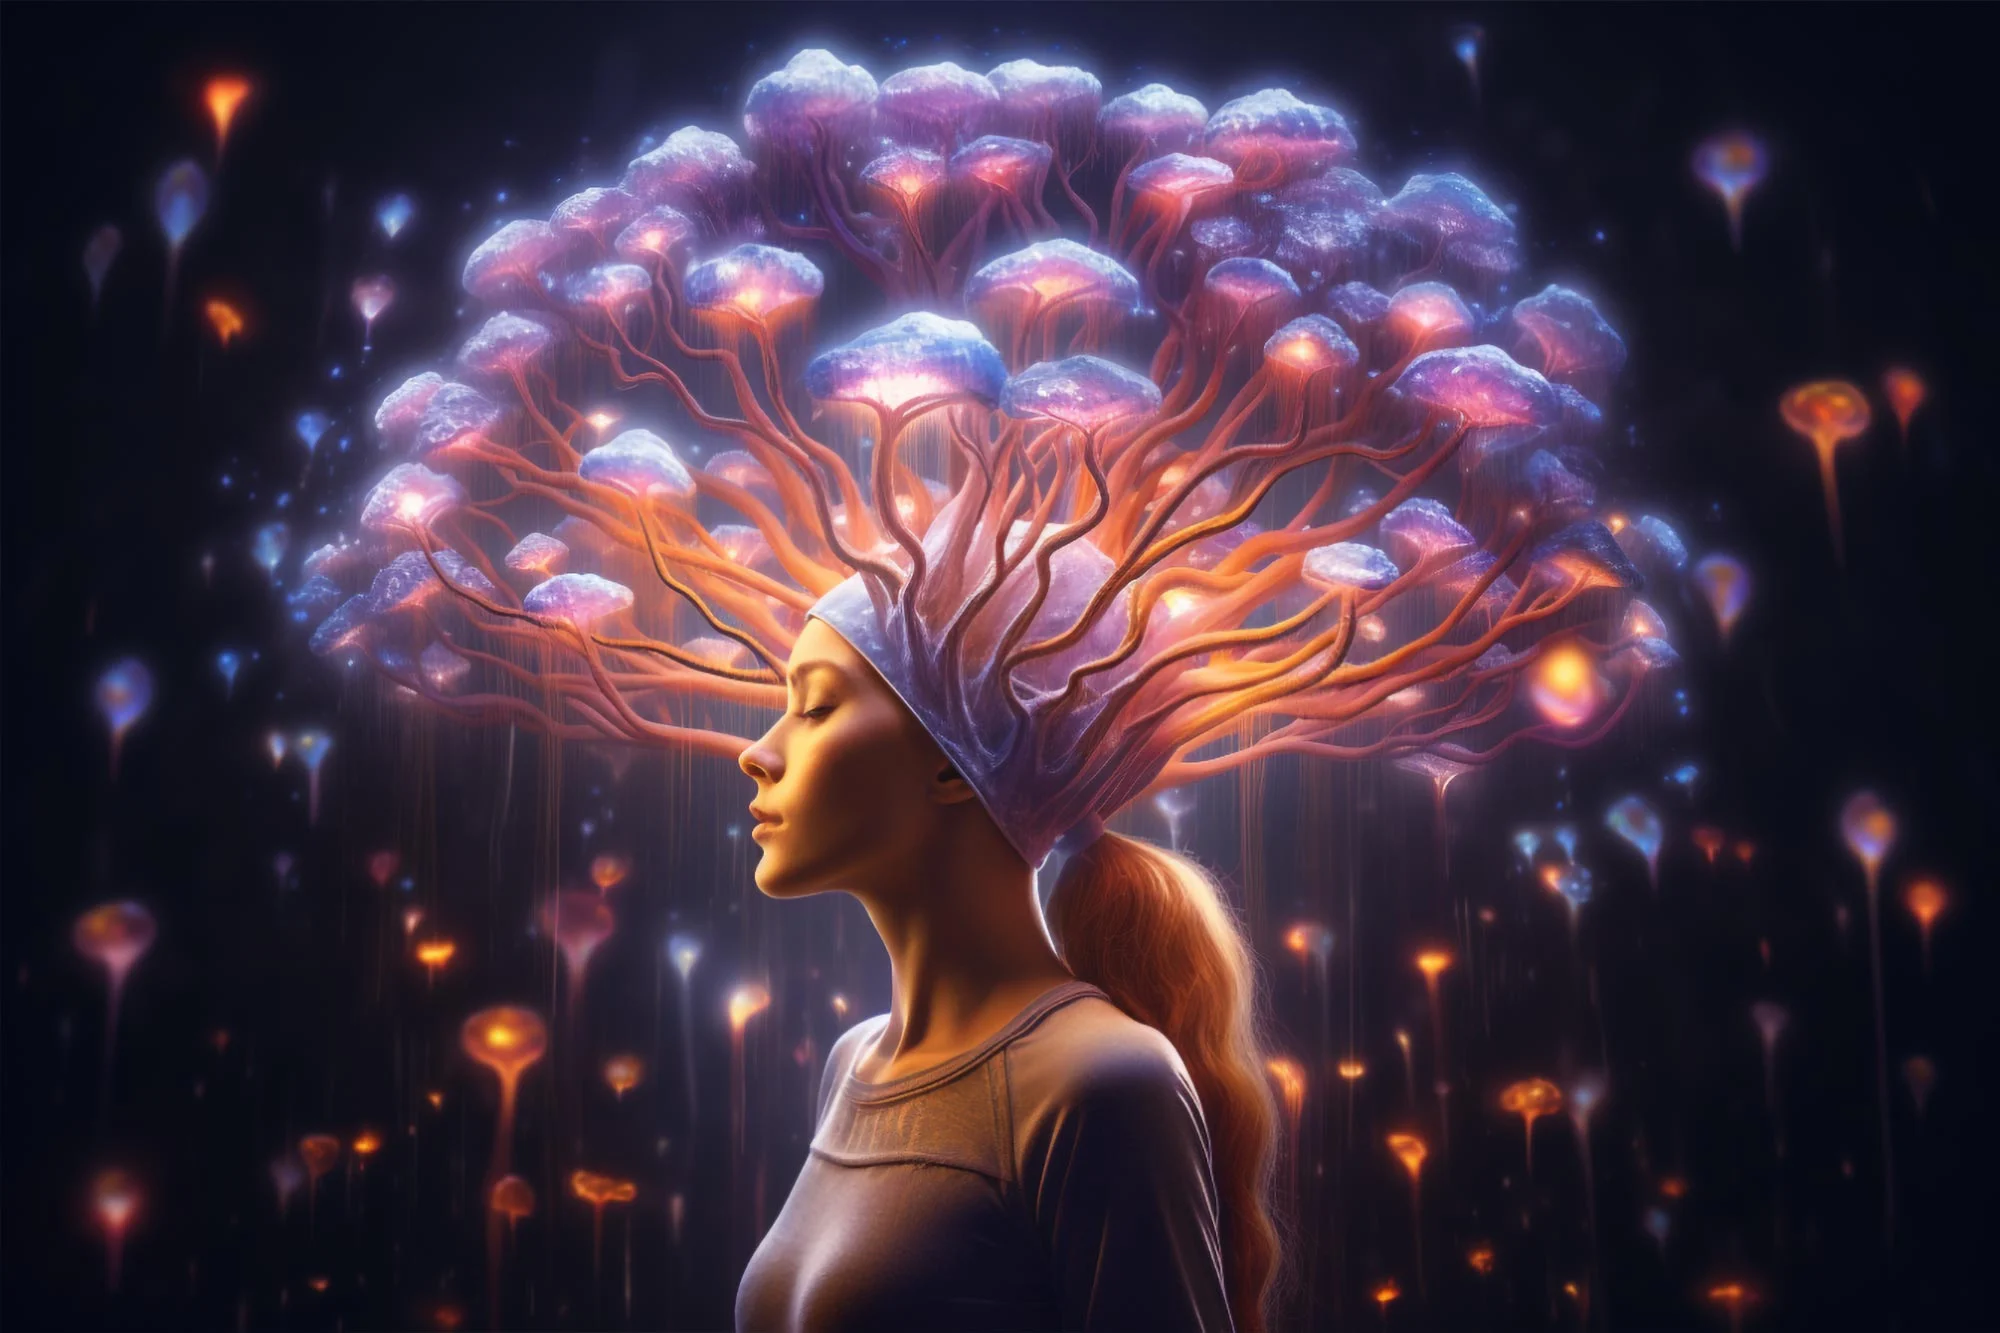 Psychedelic Depression Mental Health Boost Concept Art